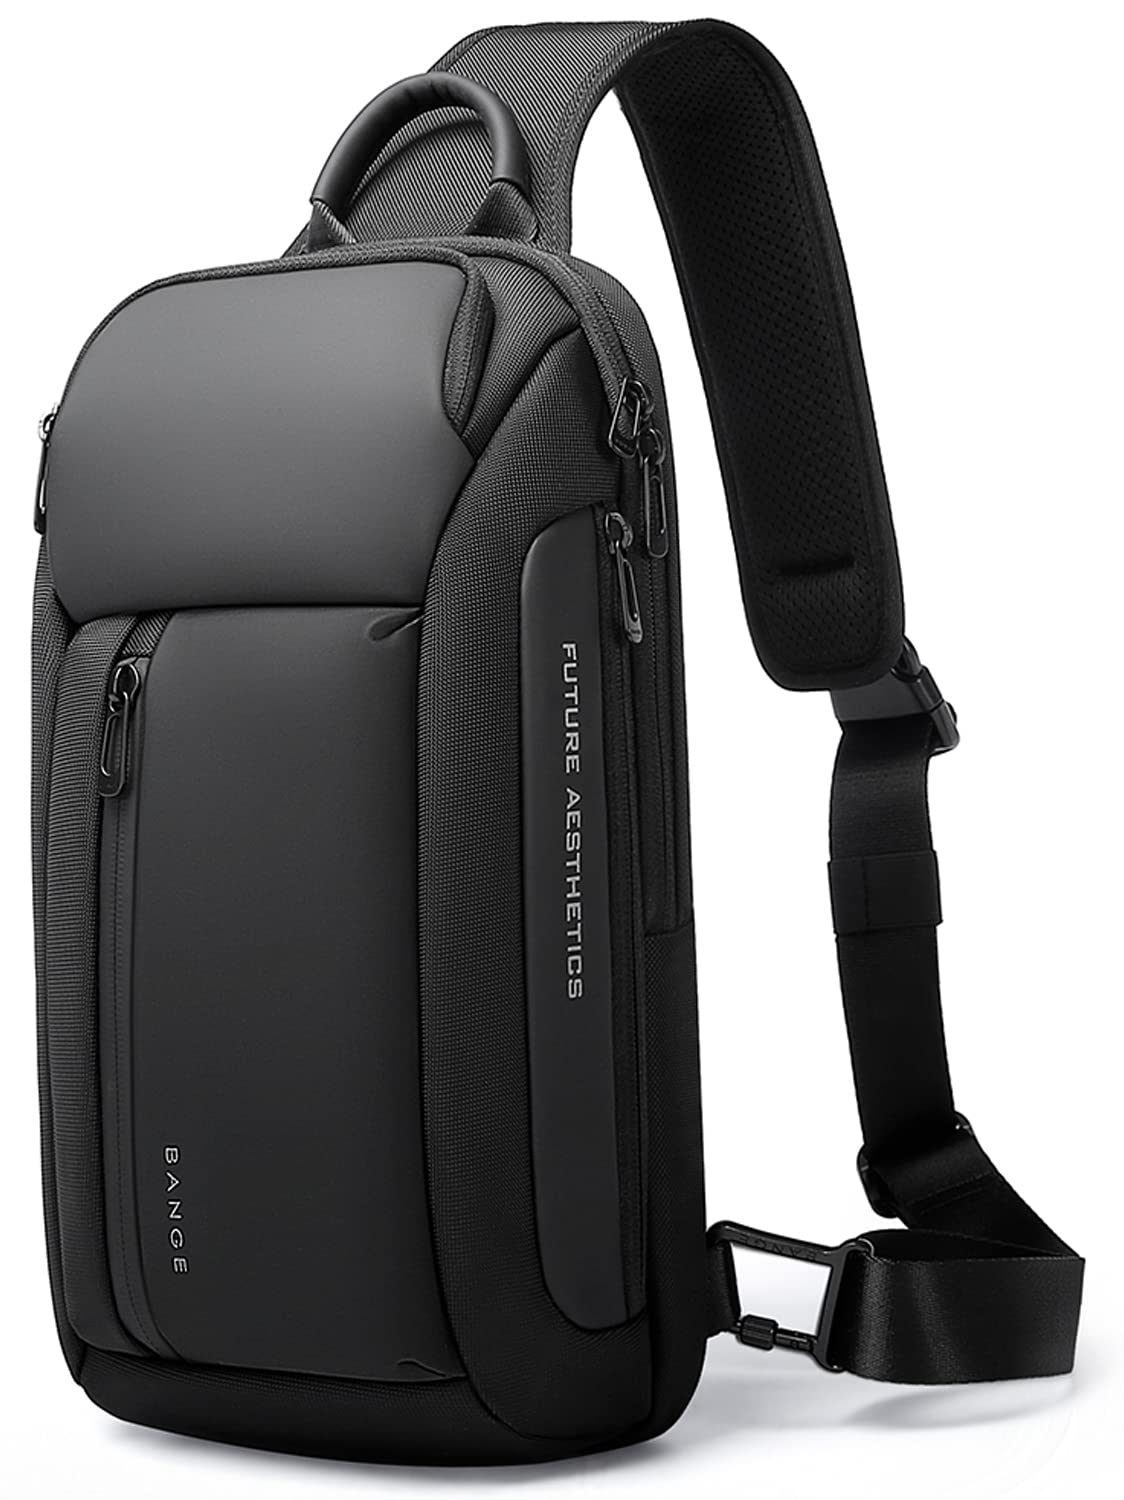 SZSS ボディバッグ ショルダーバッグ ボディーバッグ 大容量 防水 肩掛けバッグ 斜めがけバッグ ワンショルダーバッグ メンズ 斜めがけ 人気 iPad収納可能 通勤 旅行